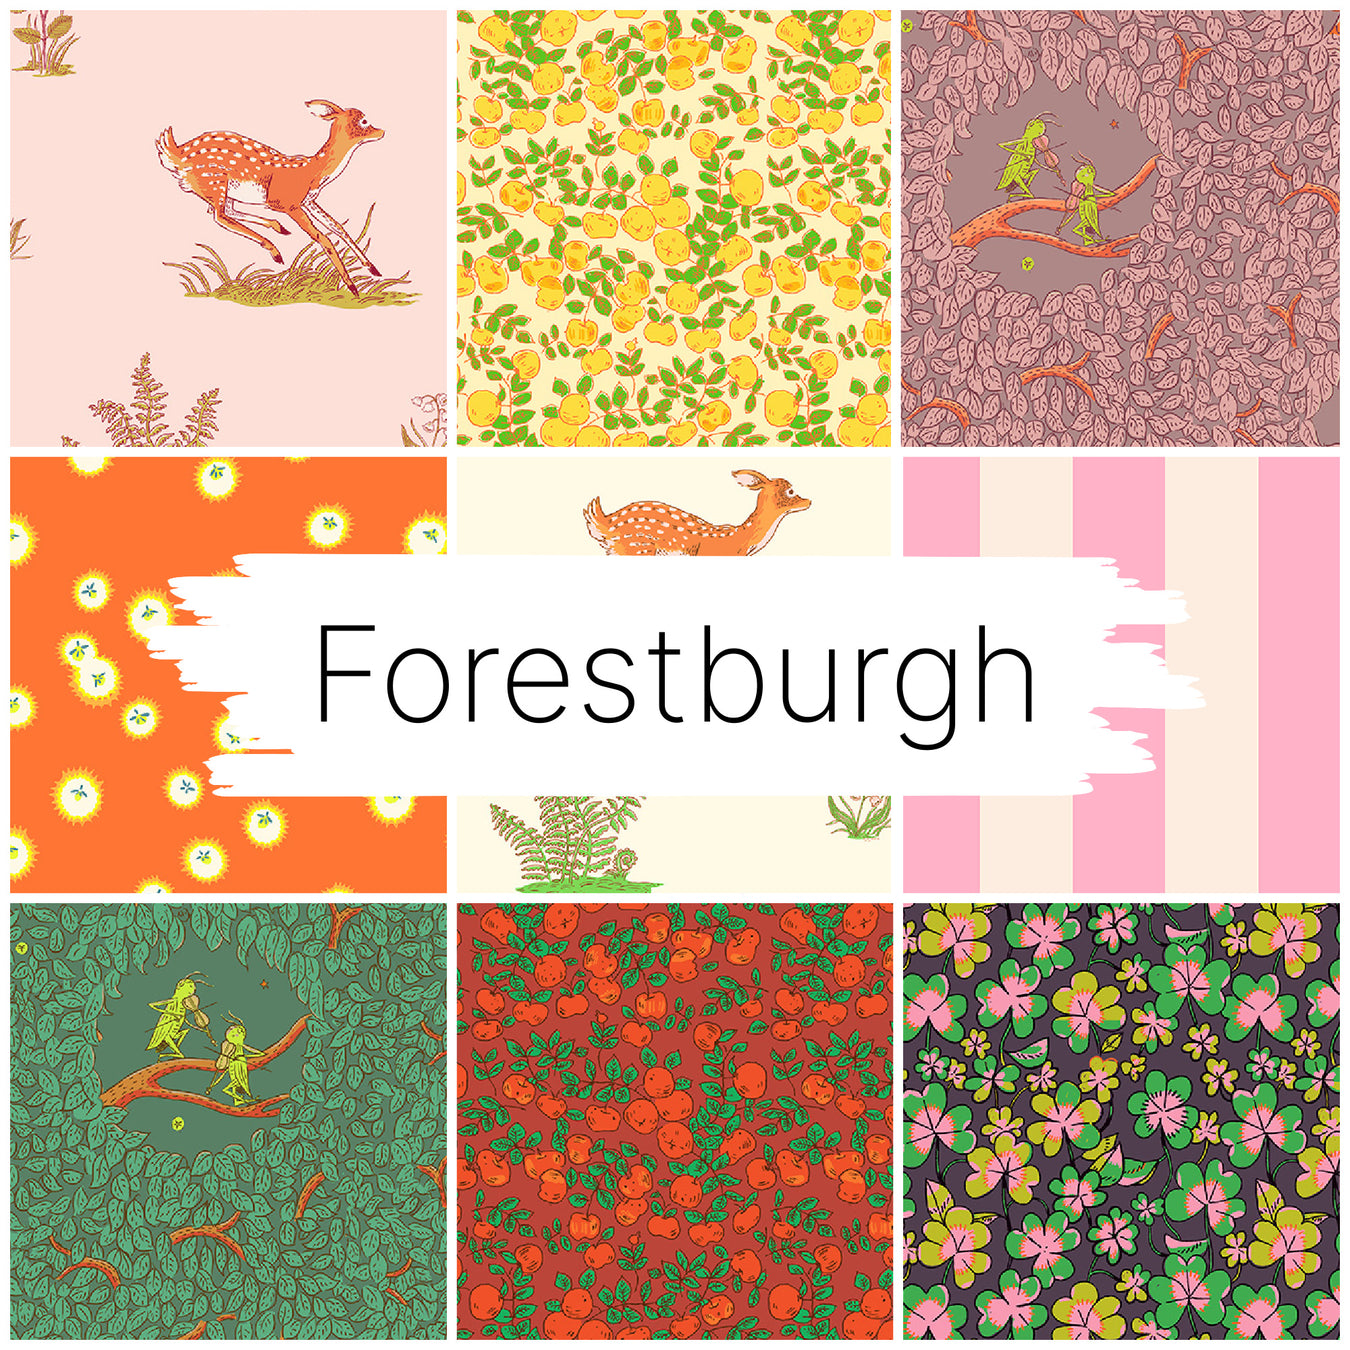 Forestburgh